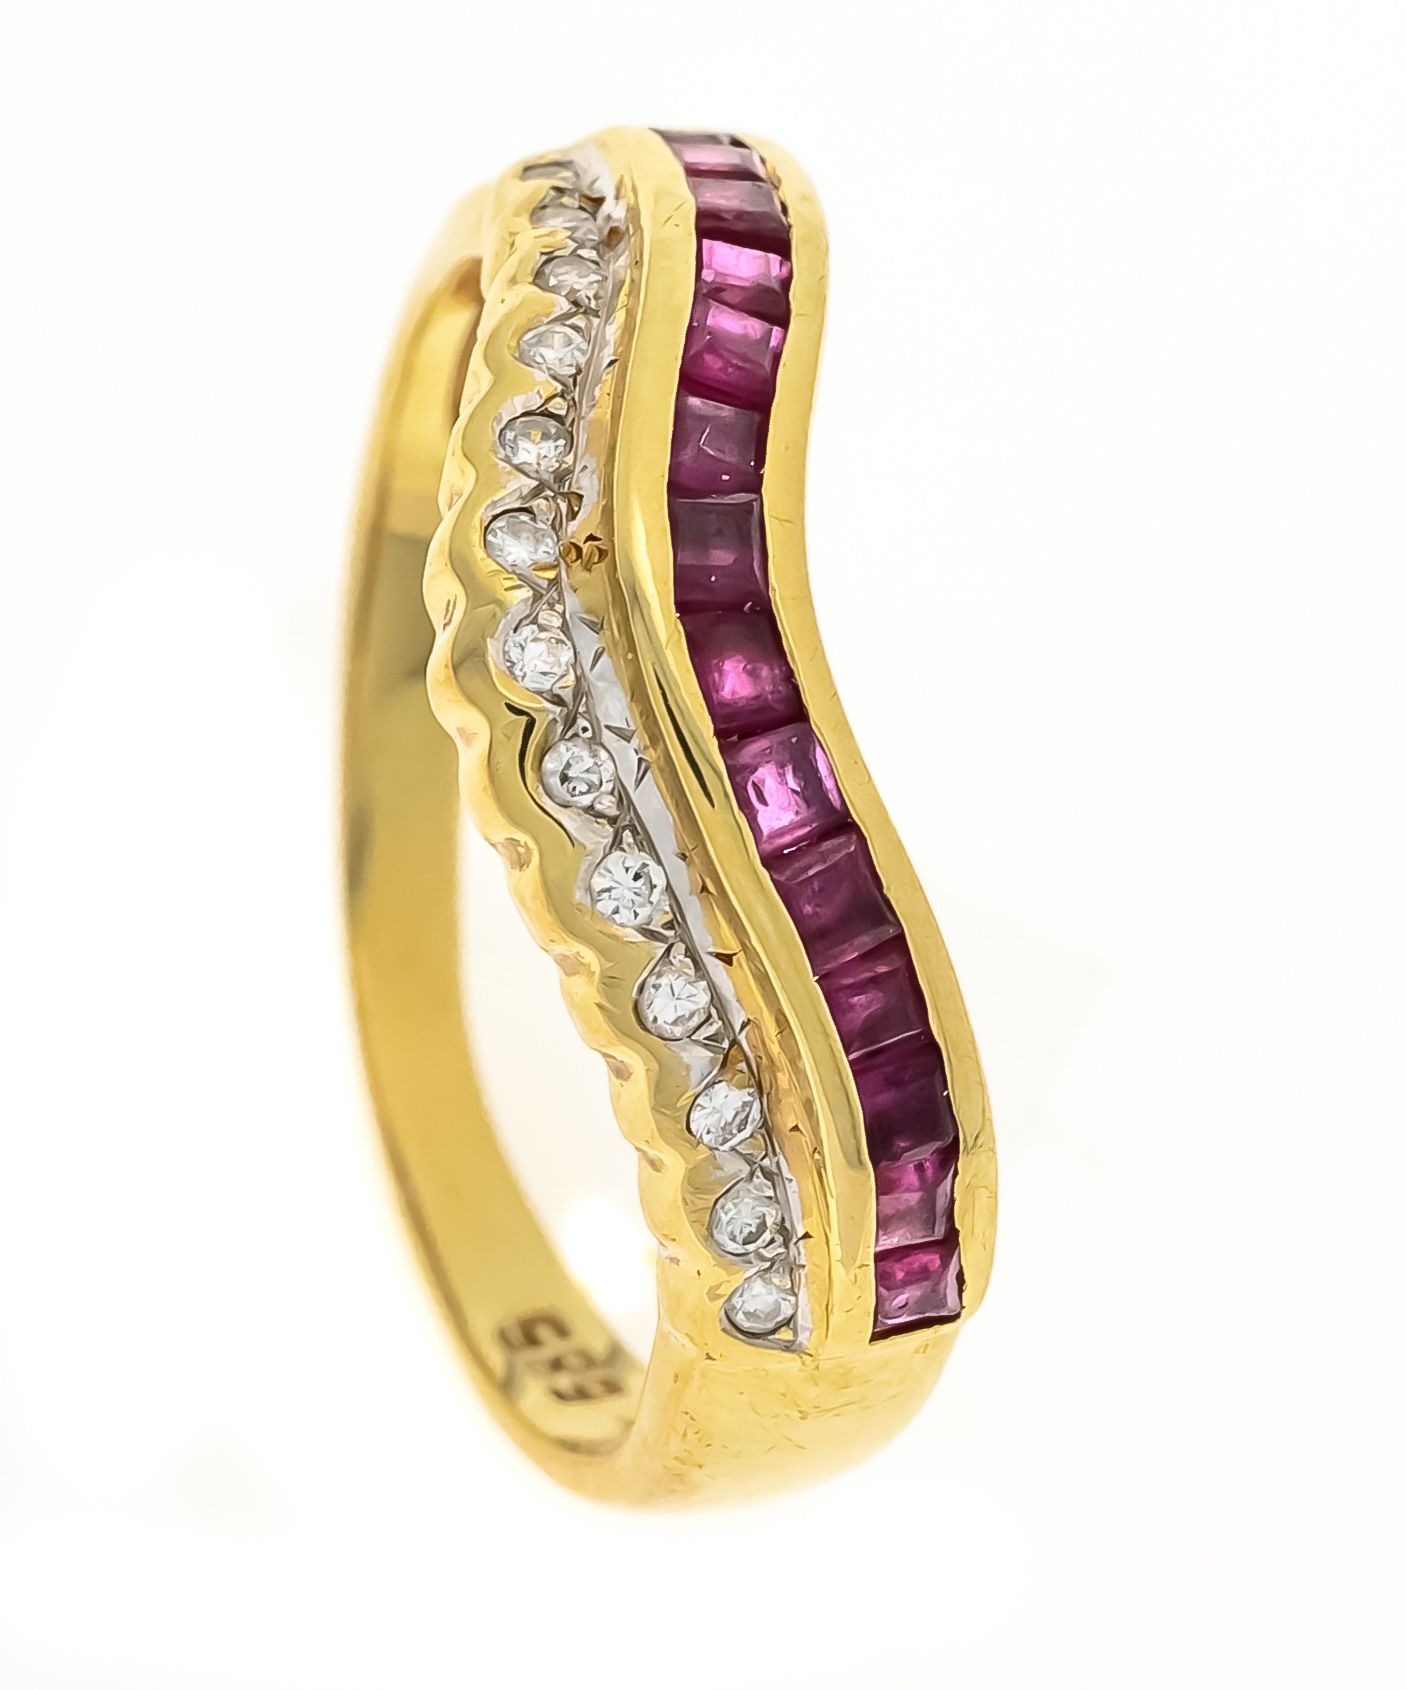 Null Anillo diamante rubí GG 585/000 con 14 rubíes talla carresch 1,7 x 1,7 mm y&hellip;